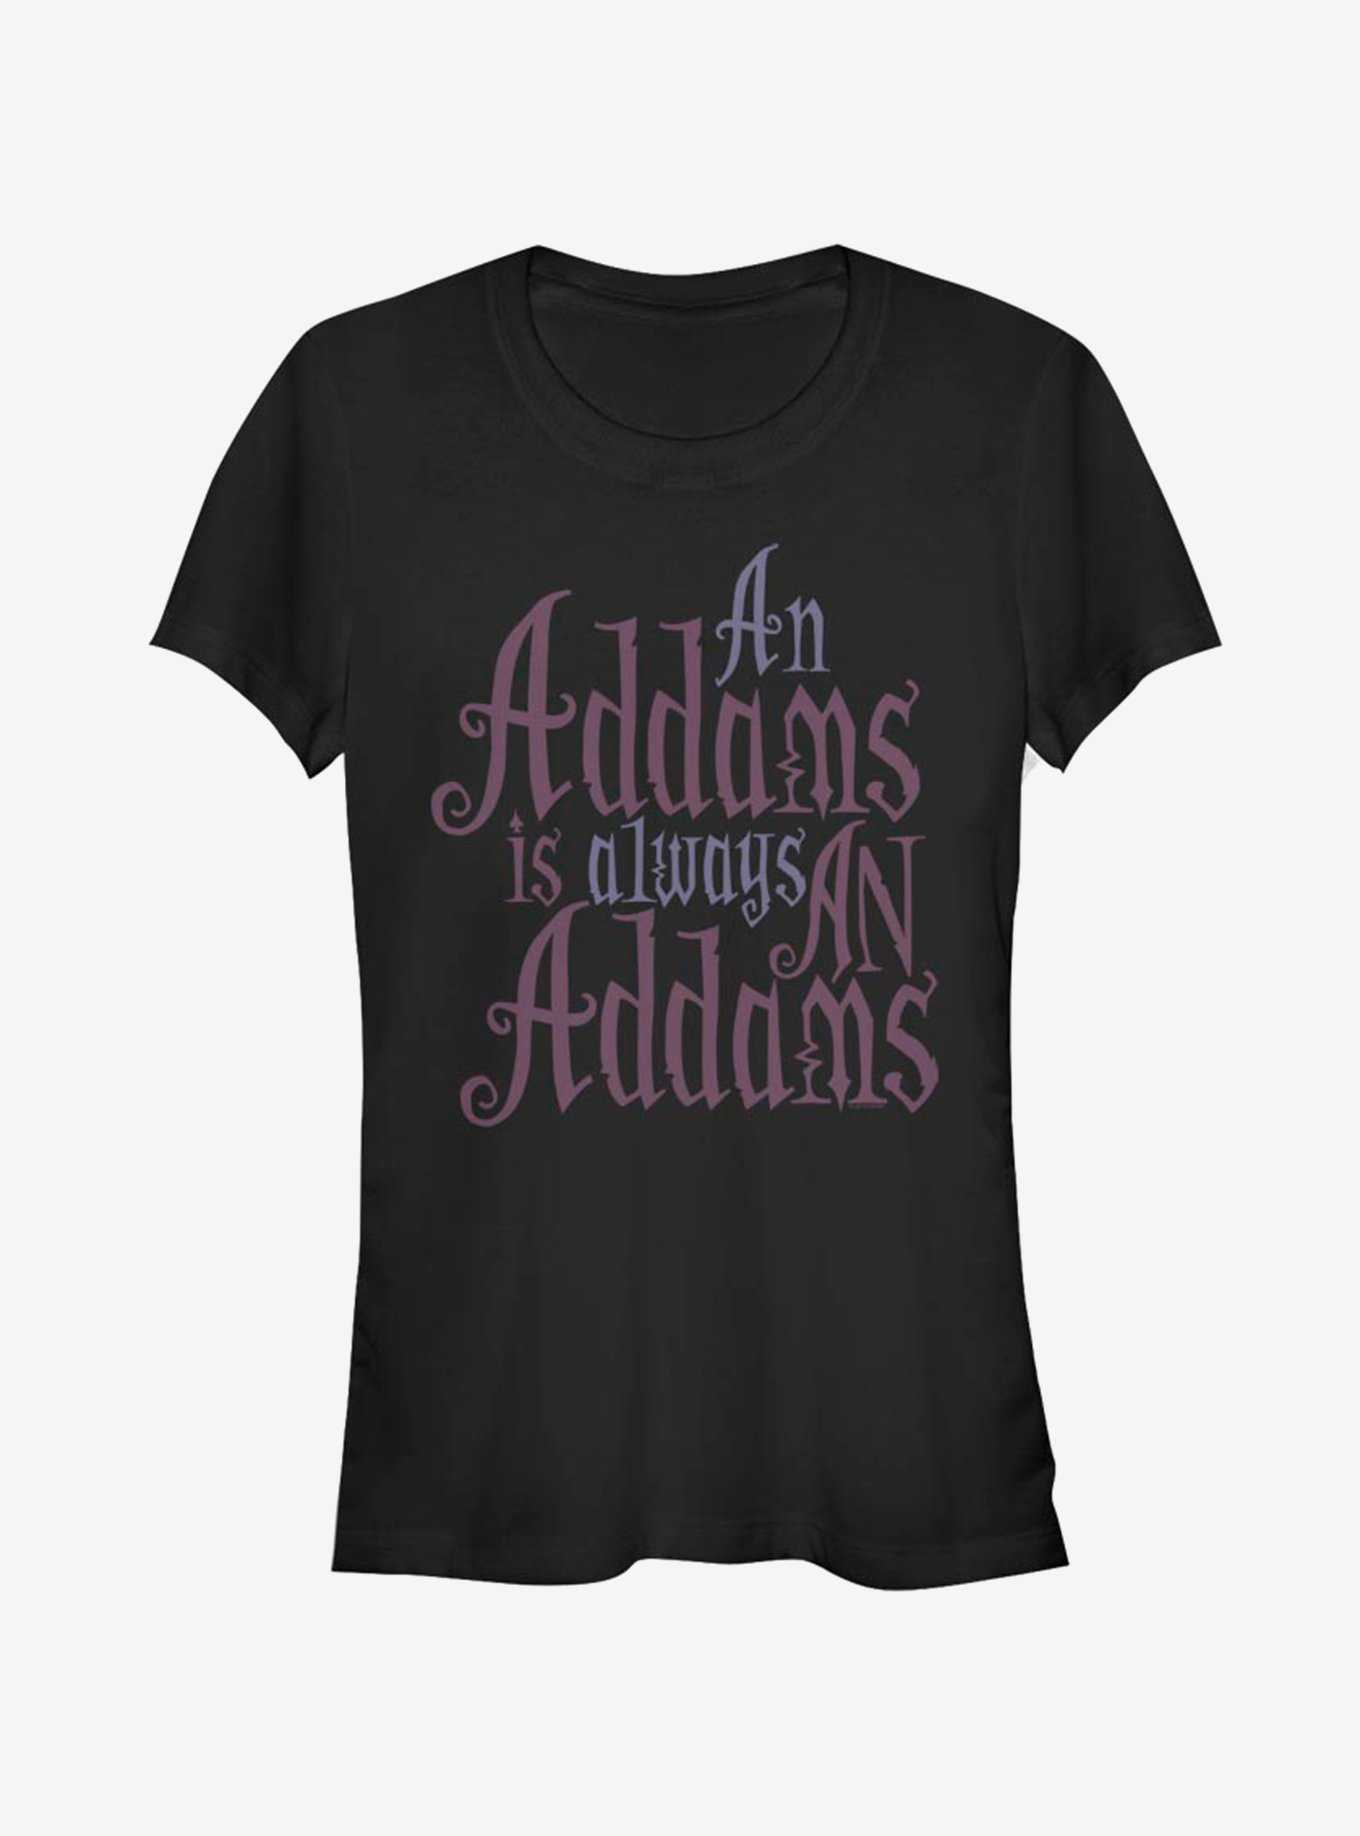 The Addams Family Always An Addams Girls T-Shirt, , hi-res